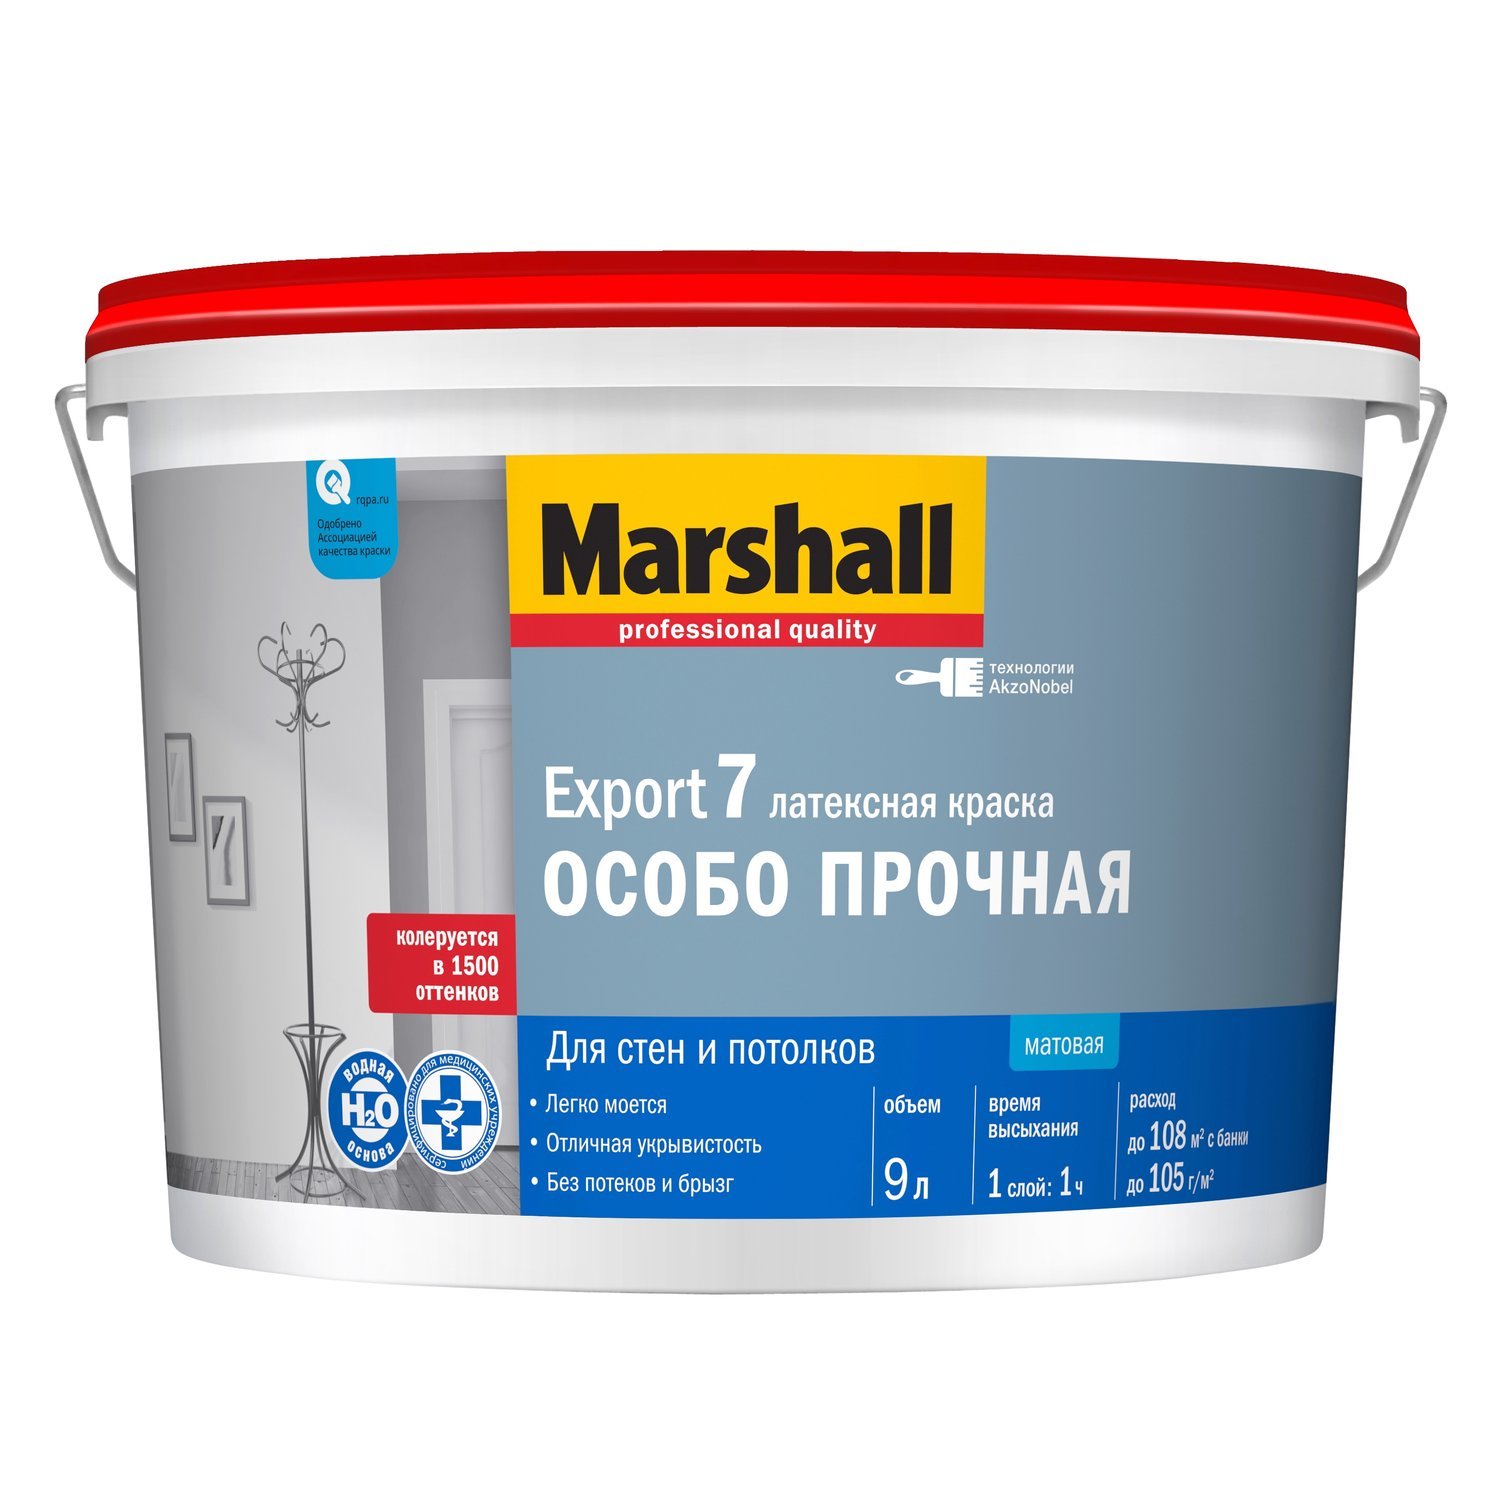 <span style="font-style: italic;">Краска в/д для стен и потолков матовая база BW, Marshall Export-7</span><br>